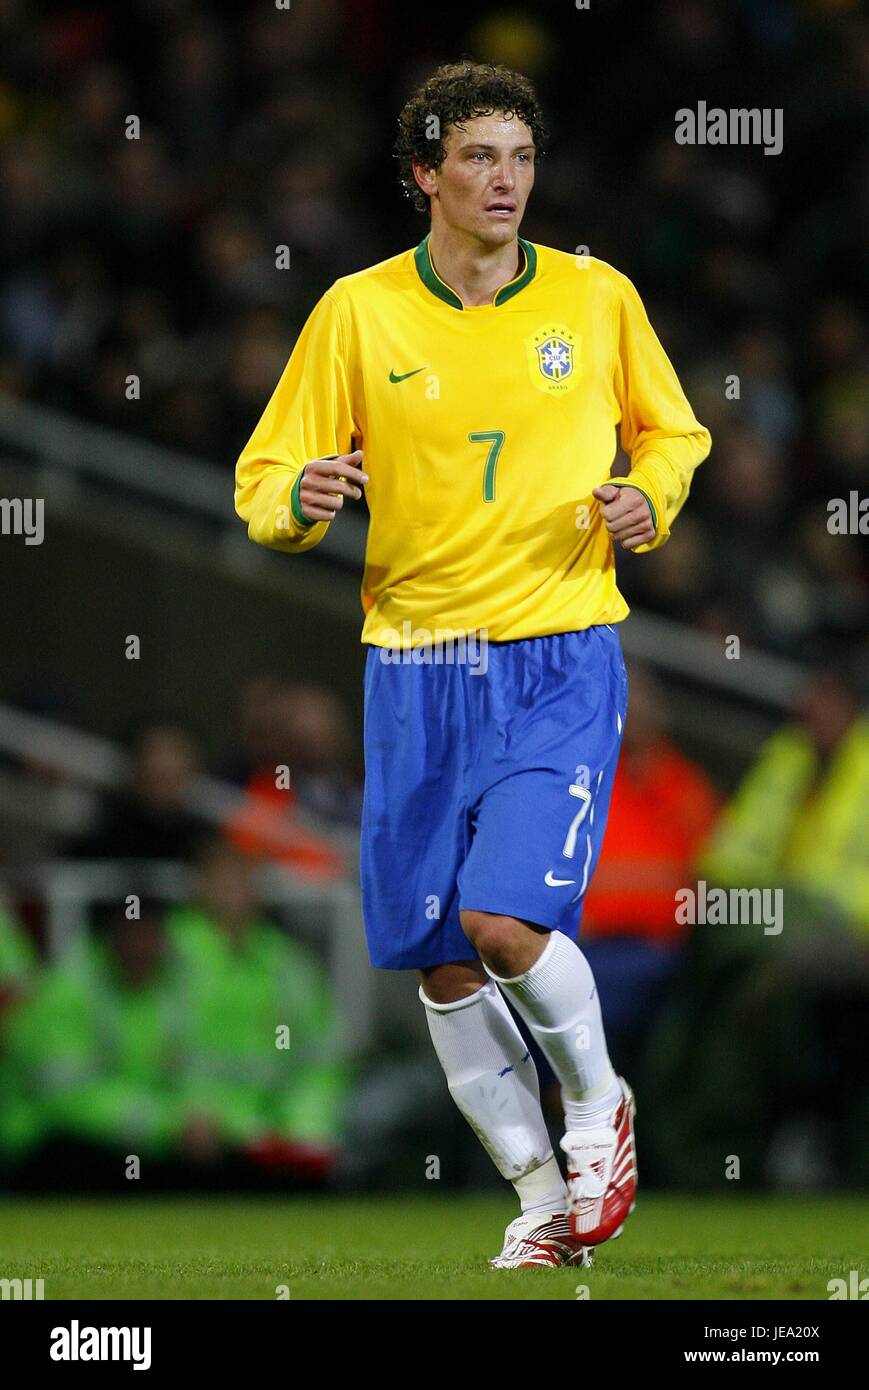 Brasil ELANO y el Shakhtar Donetsk del Emirates Stadium, el Arsenal de Londres, 06 de febrero de 2007 Foto de stock